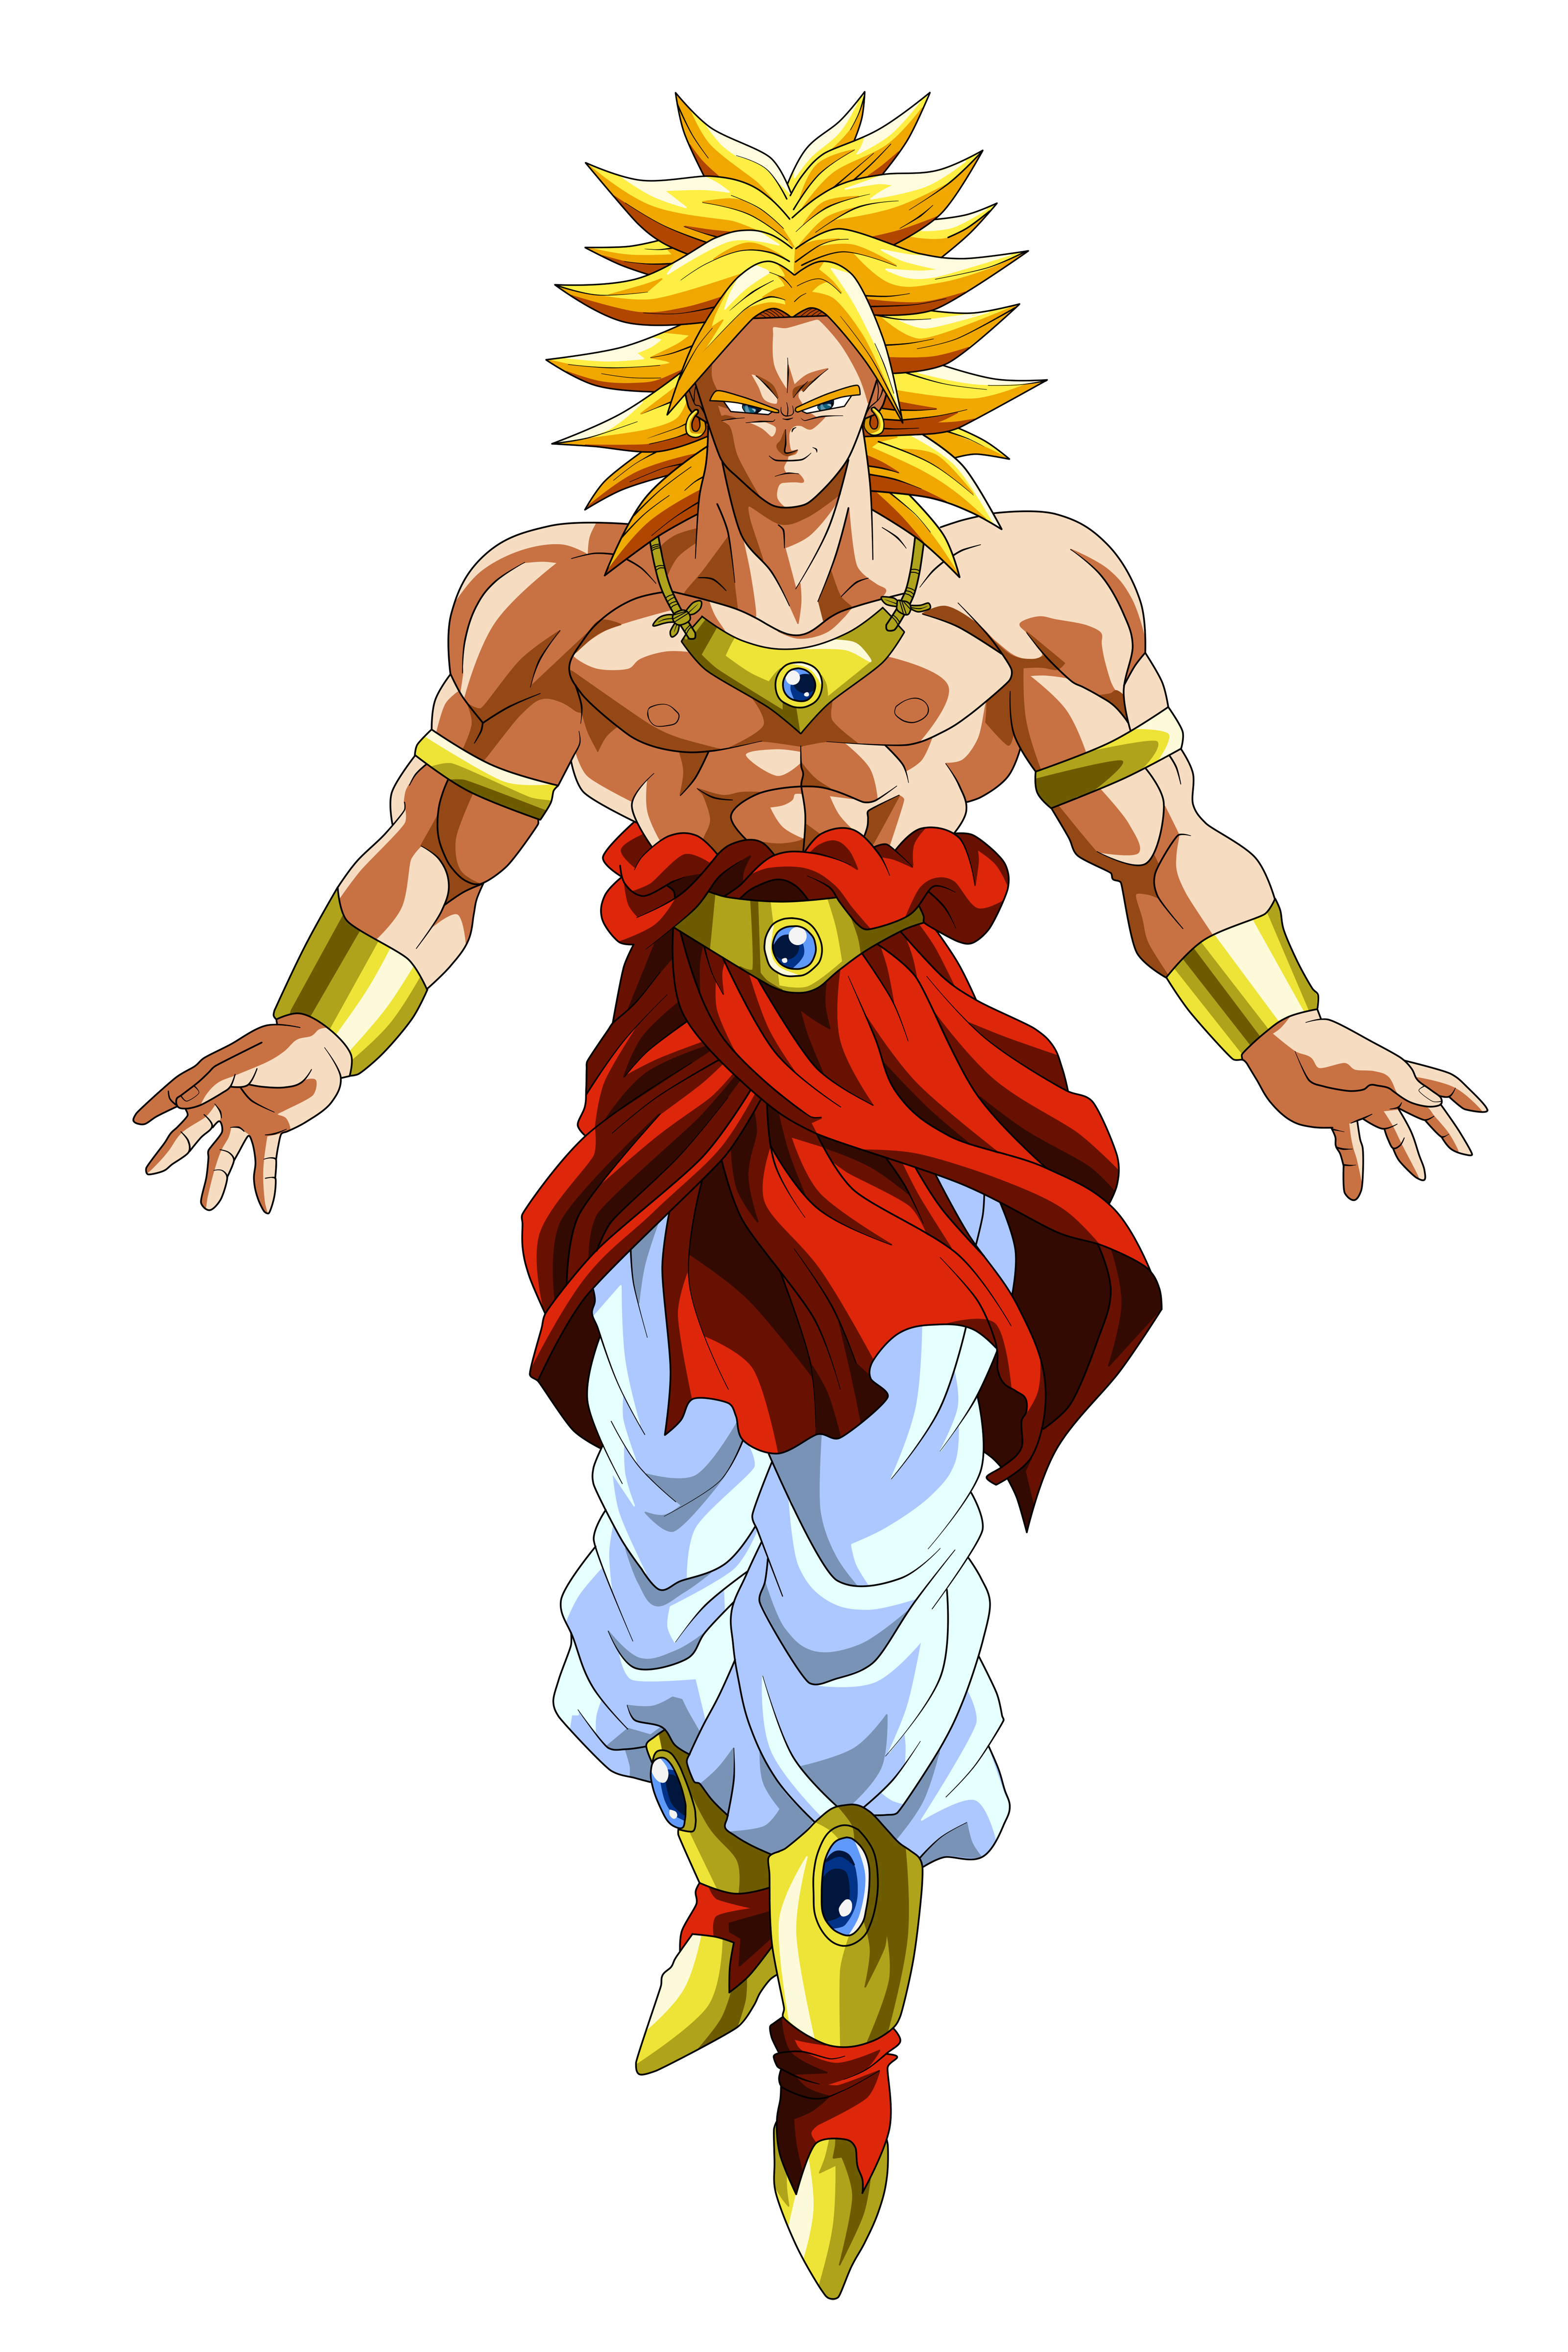 Goku Super Saiyan 3 by ameyfire on DeviantArt